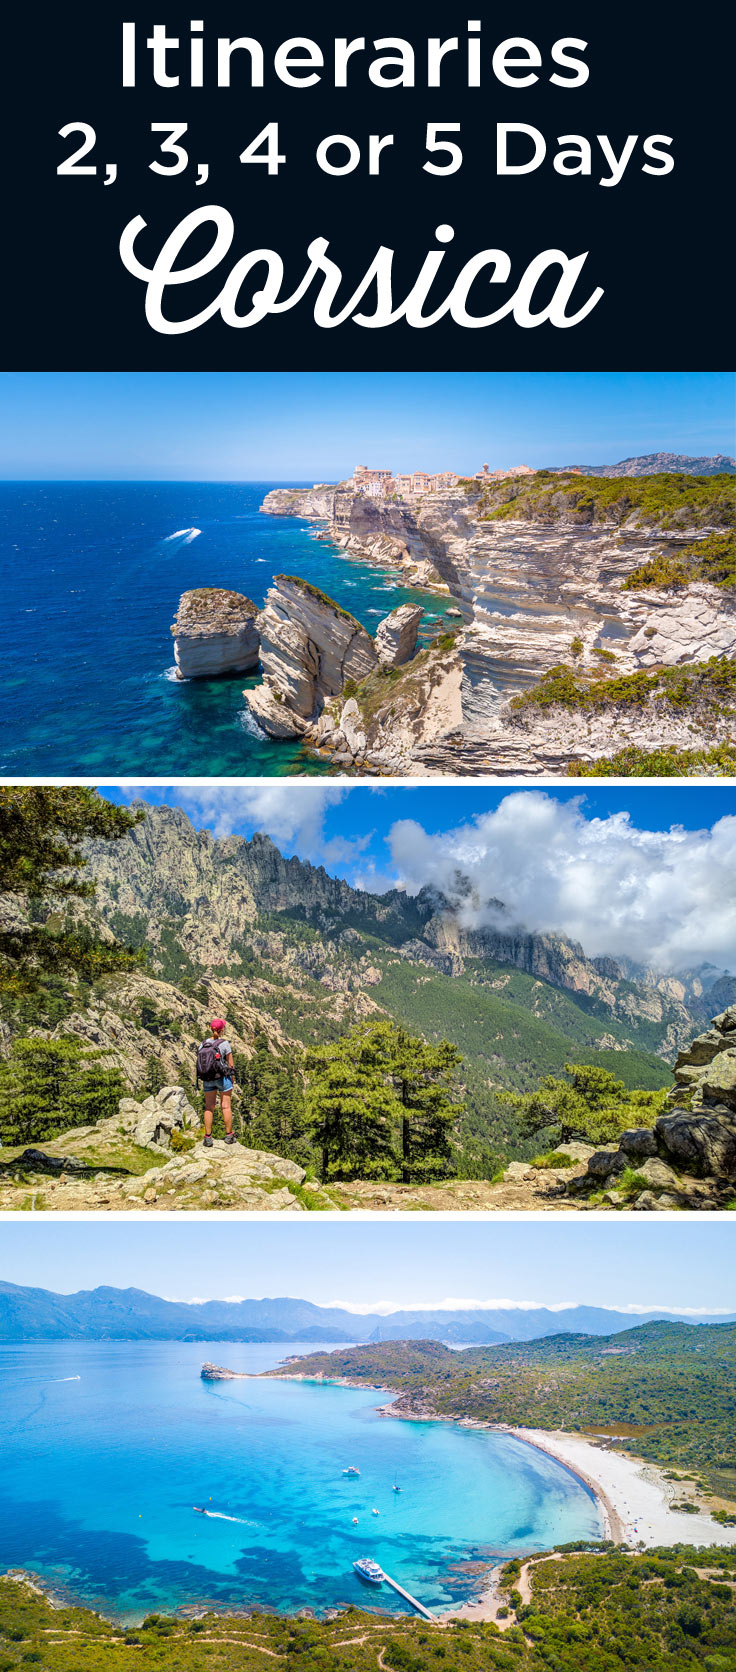 Itinerary Corsica 2-3-4-5 days